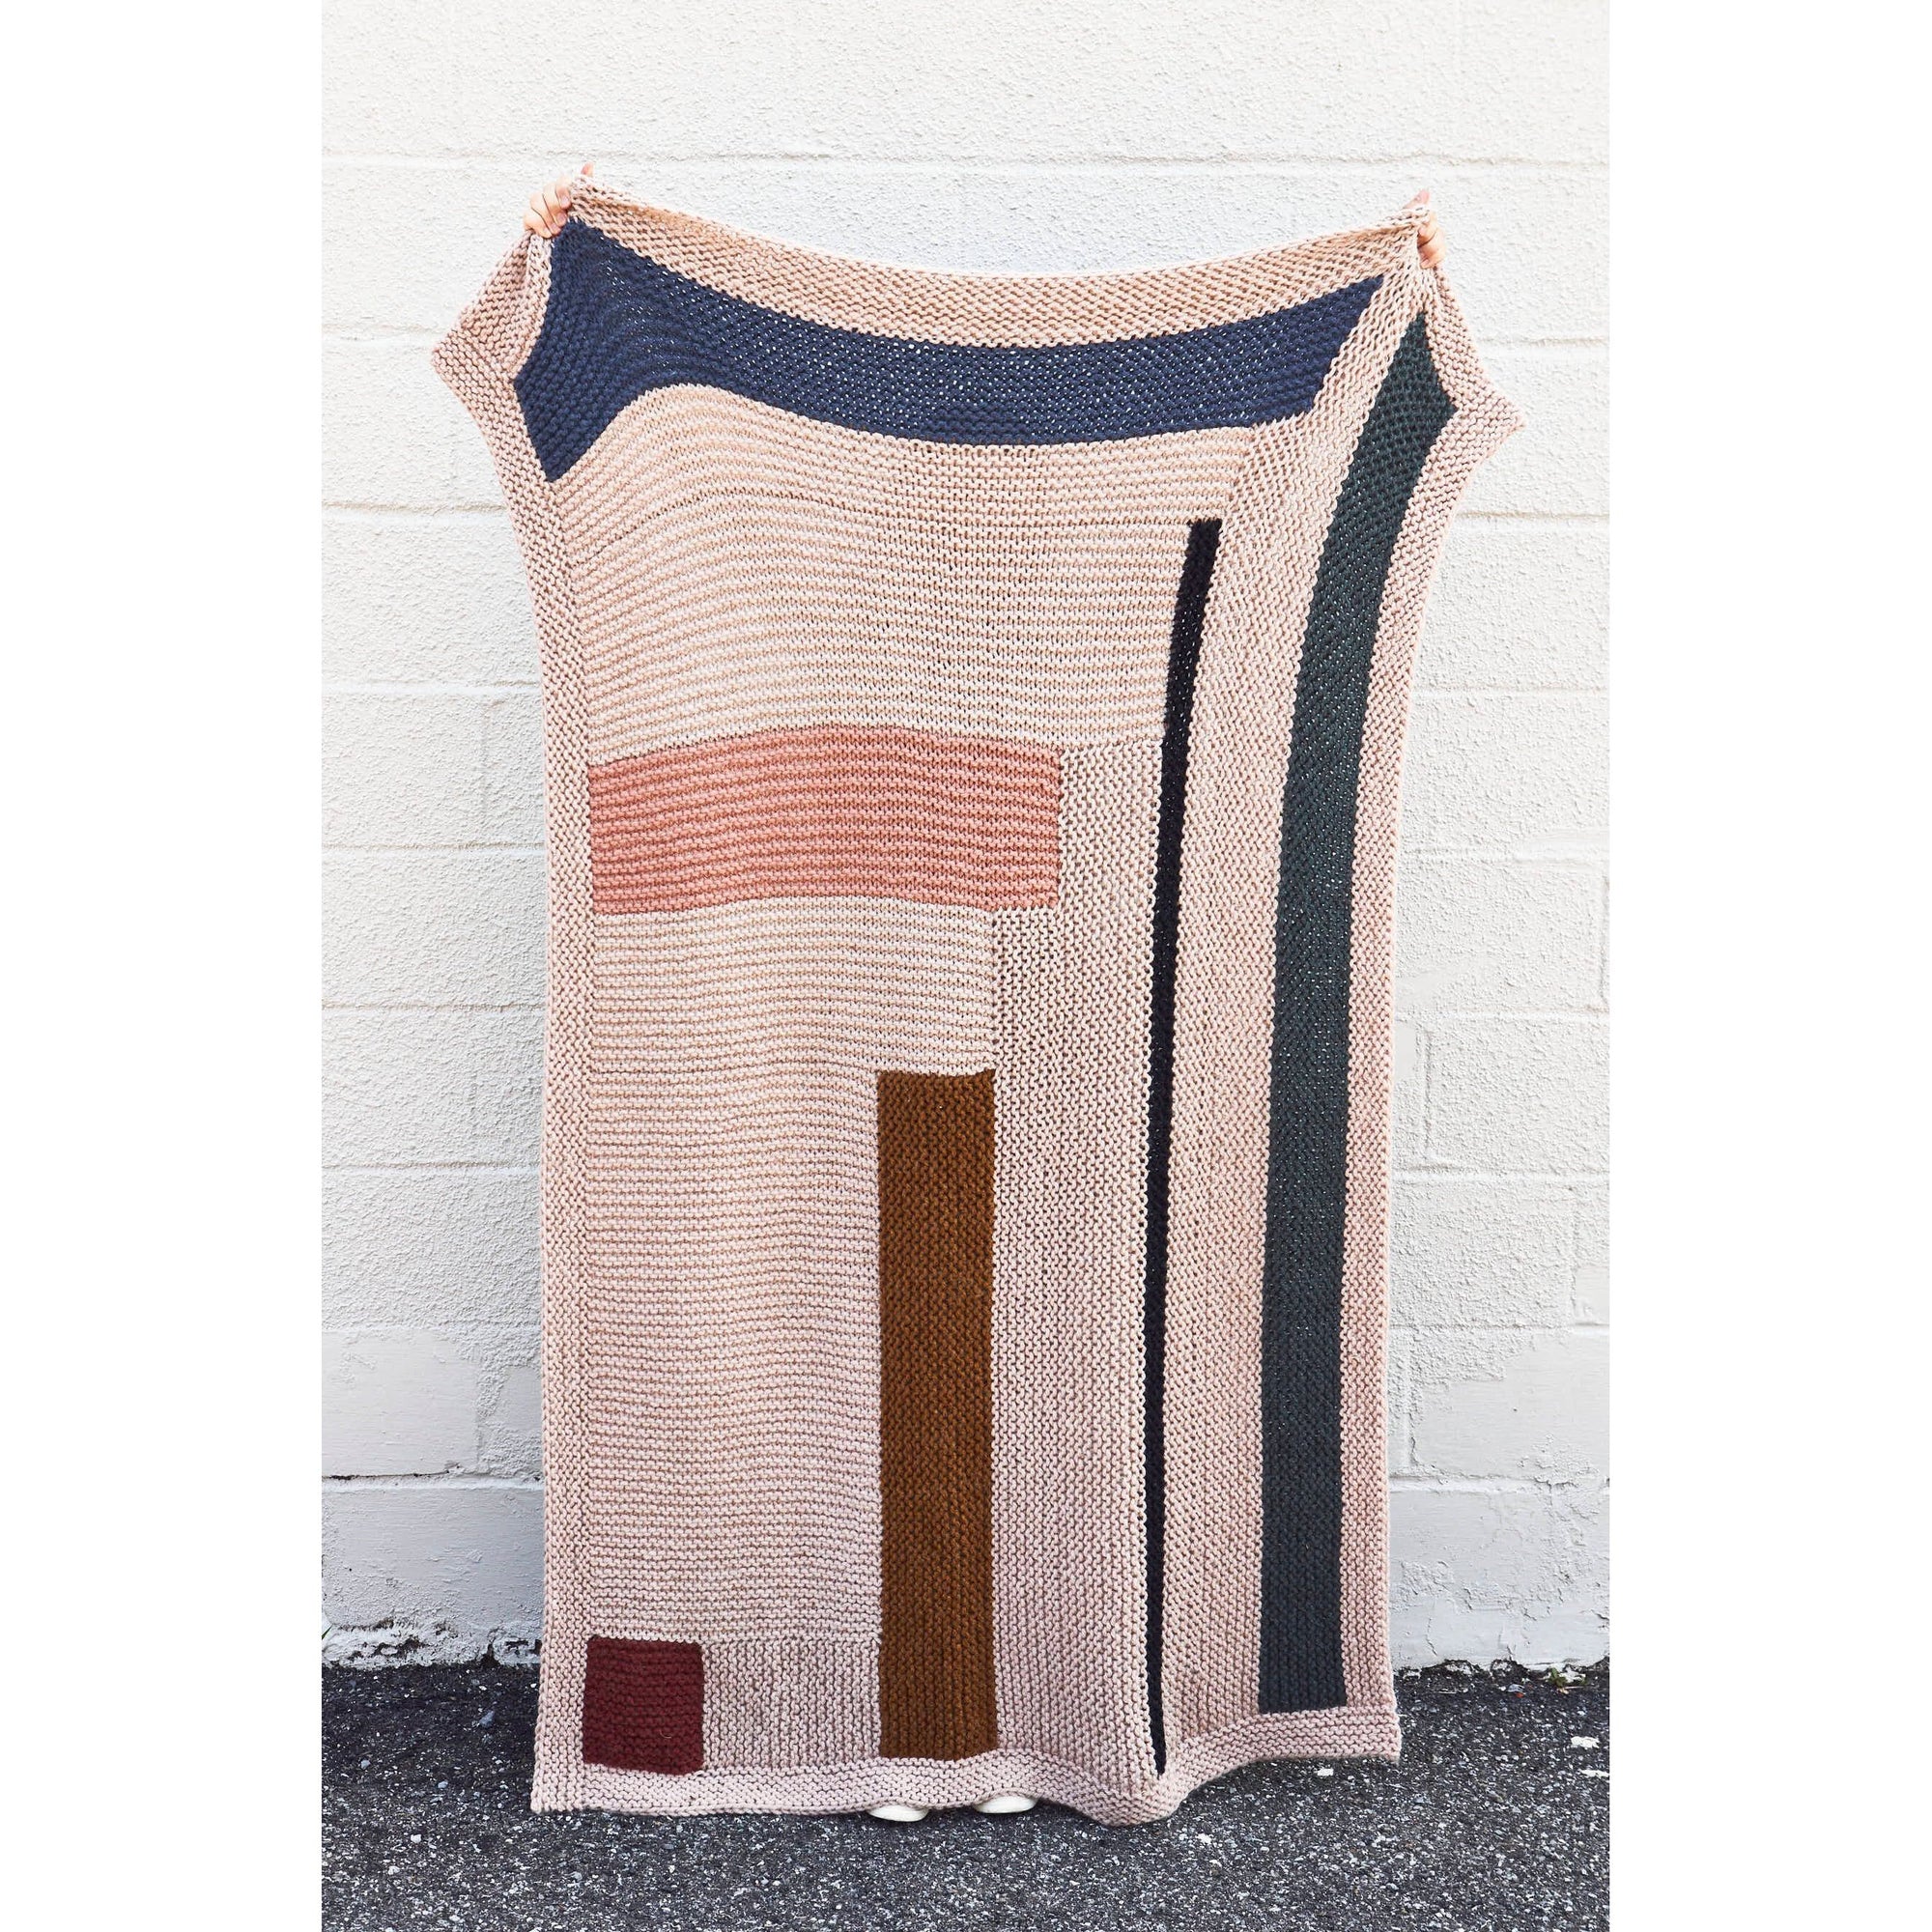 Knitting Kit Rockwell Blanket using Hue & Me Yarn